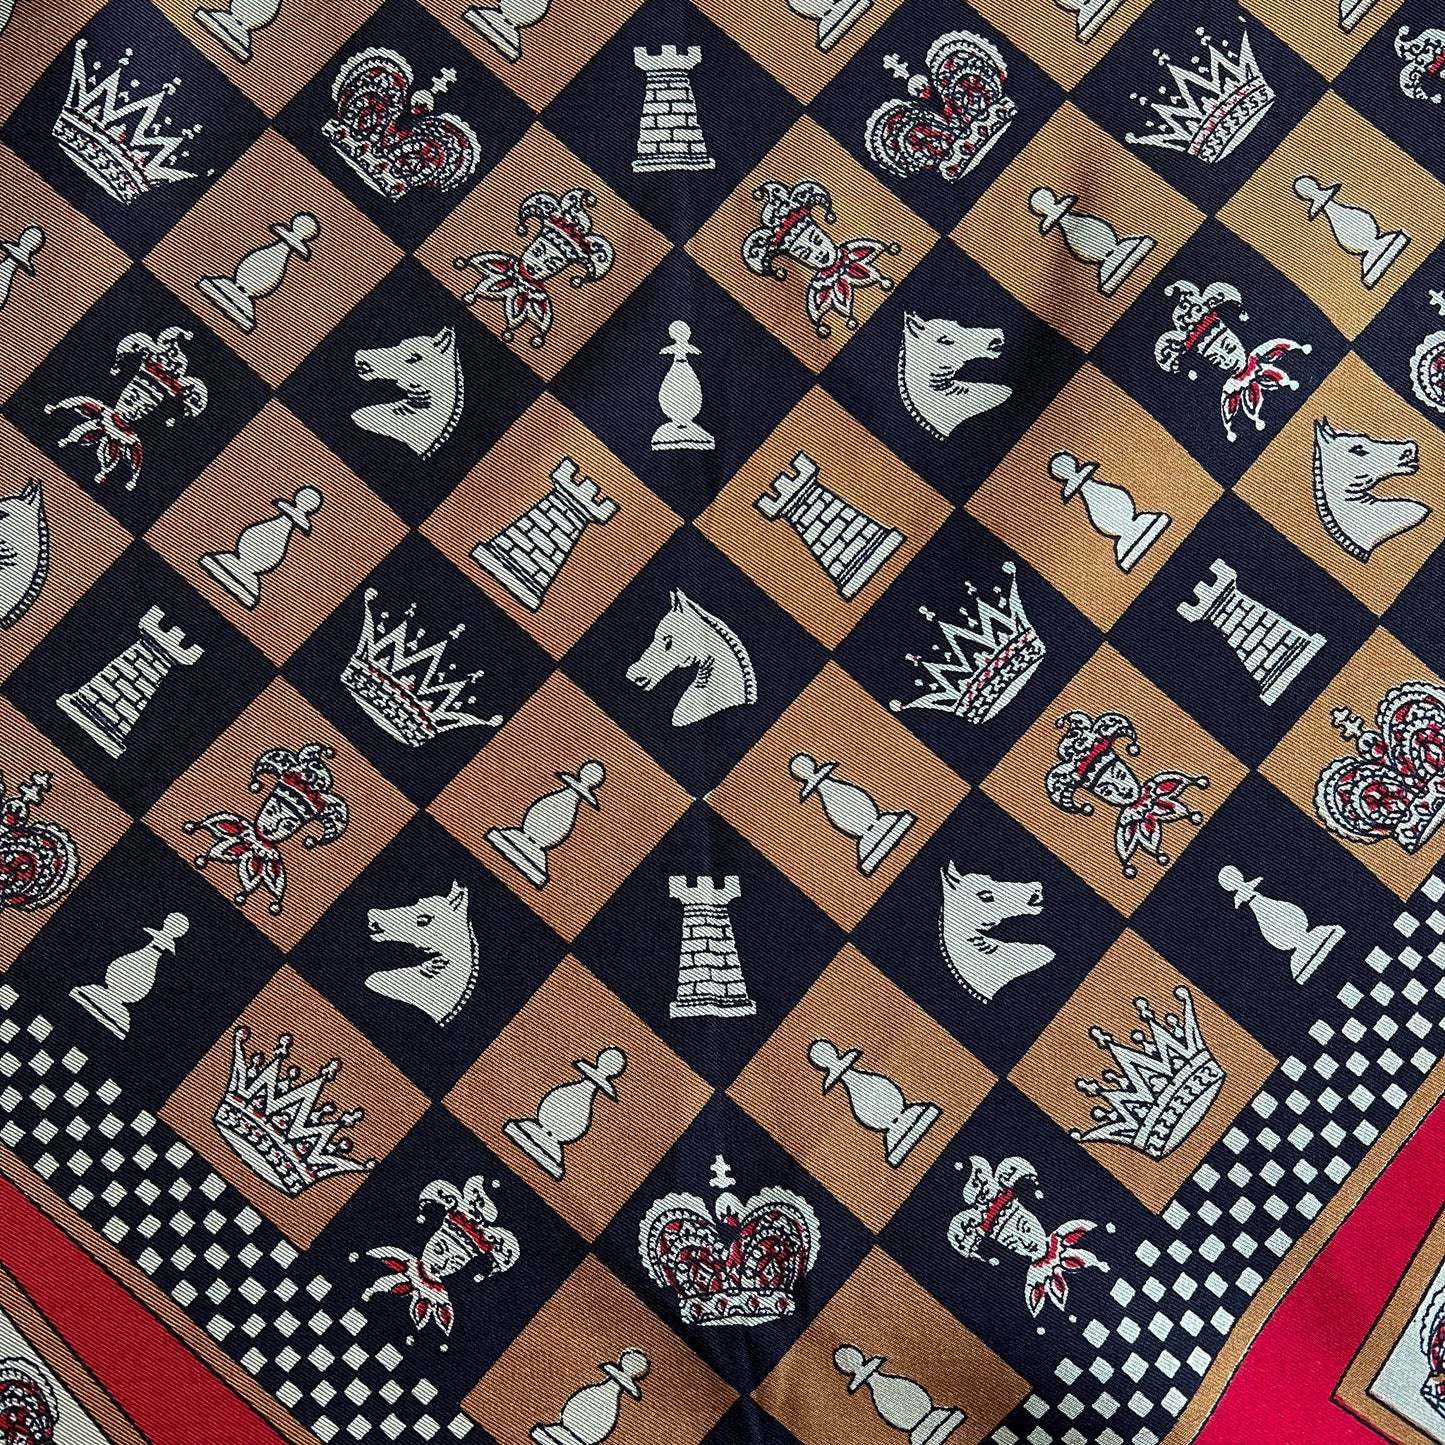 1960s Chessboard Red Background Silk Scarf